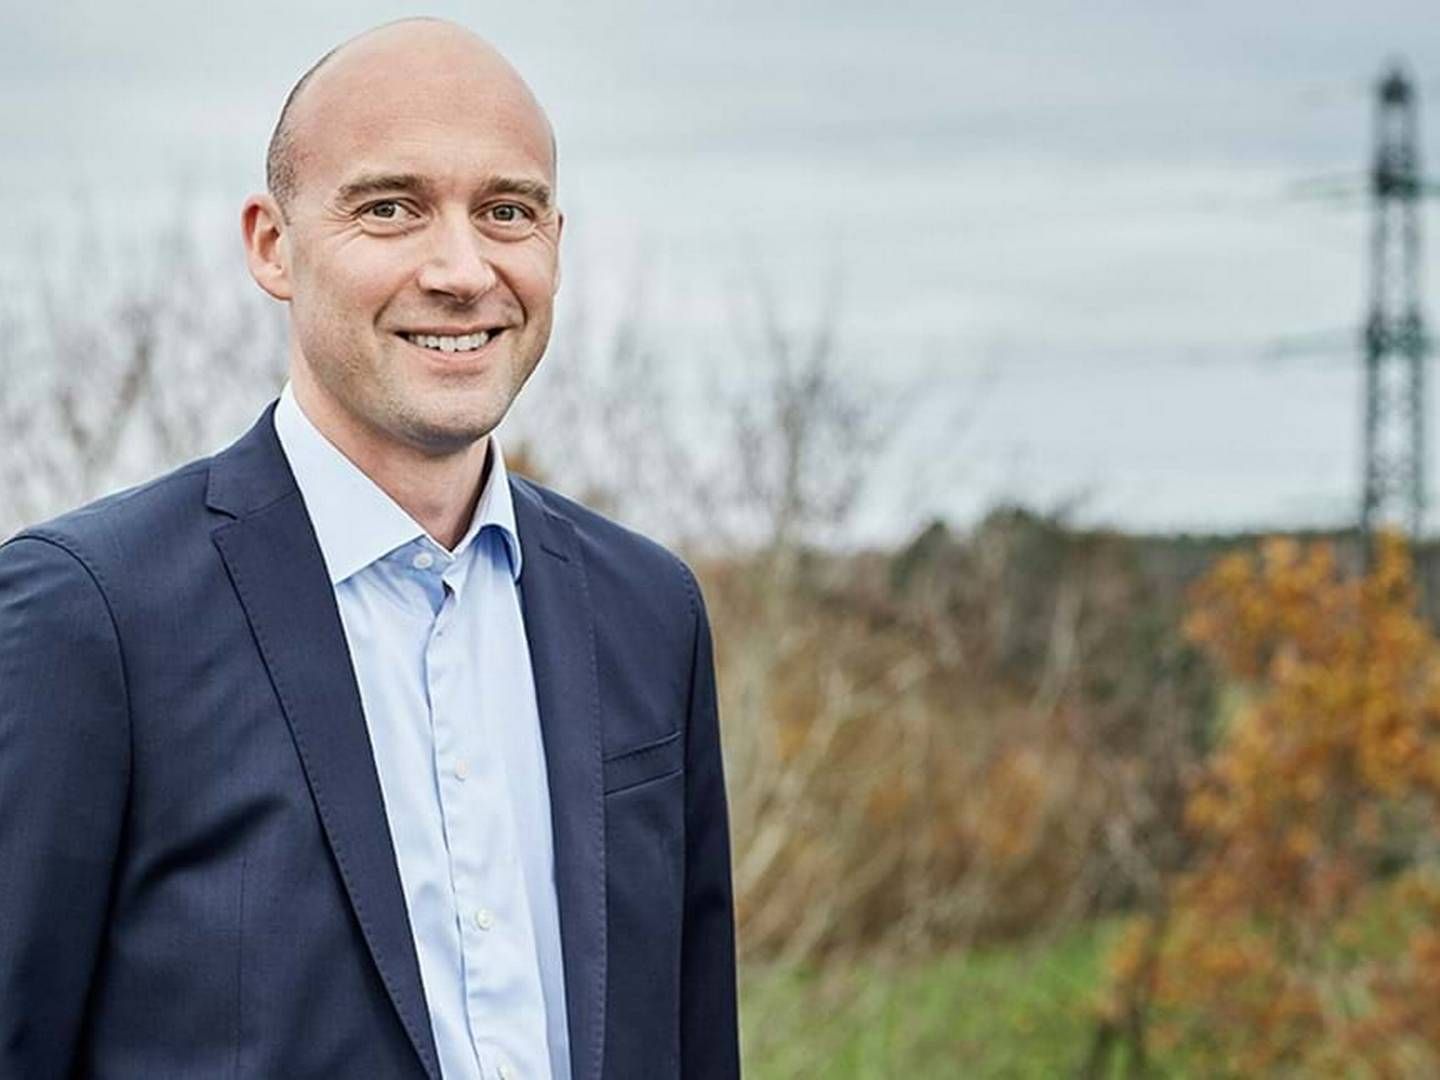 Nikolaj Holmer Nissen fratræder nu rollen som adm. direktør. | Foto: Bwsc